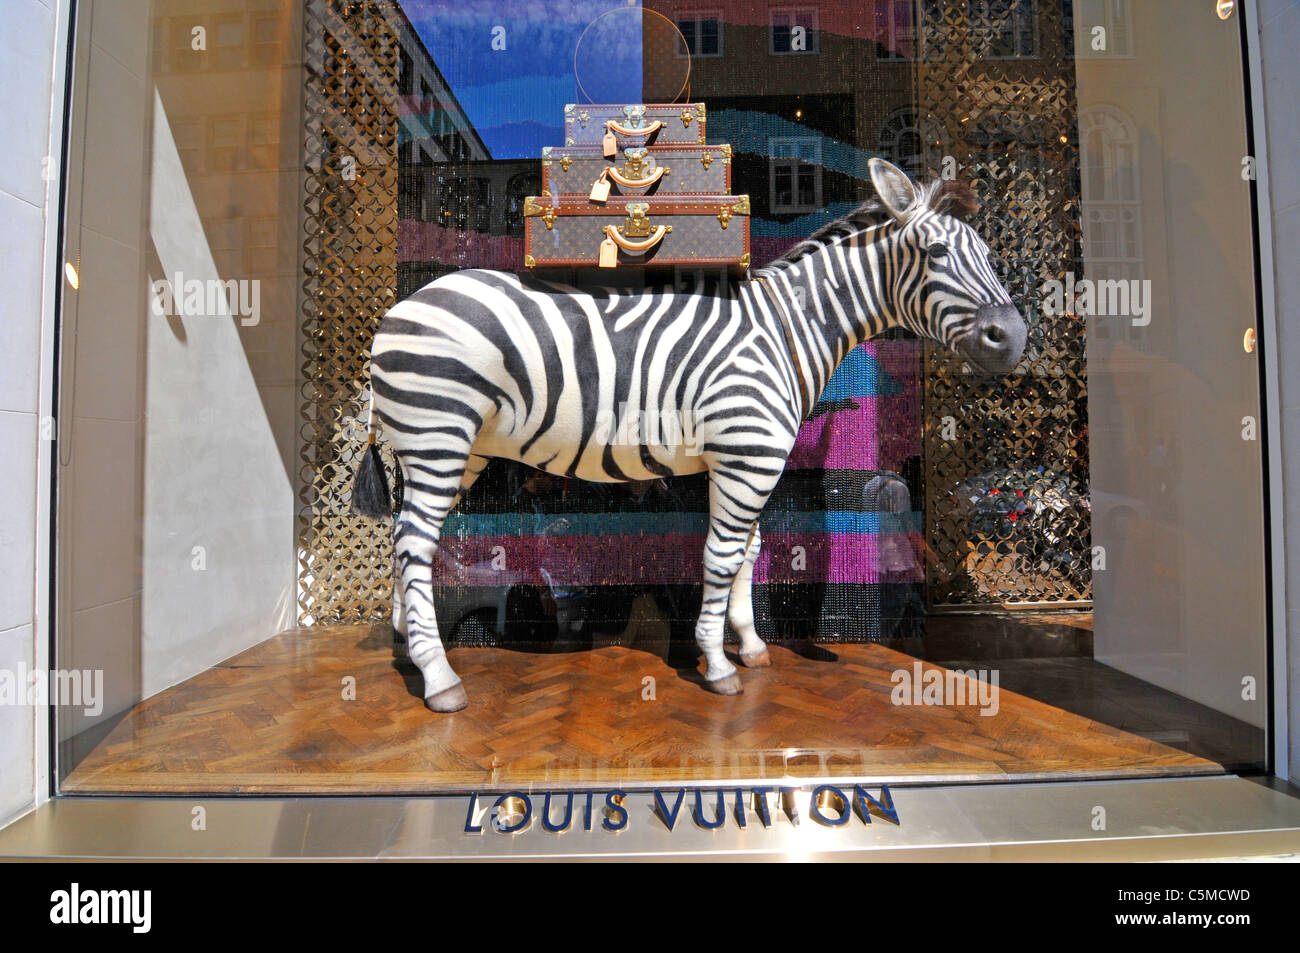 Louis Vuitton London store Zebra window display New Bond Street Stock Photo: 37943177 - Alamy